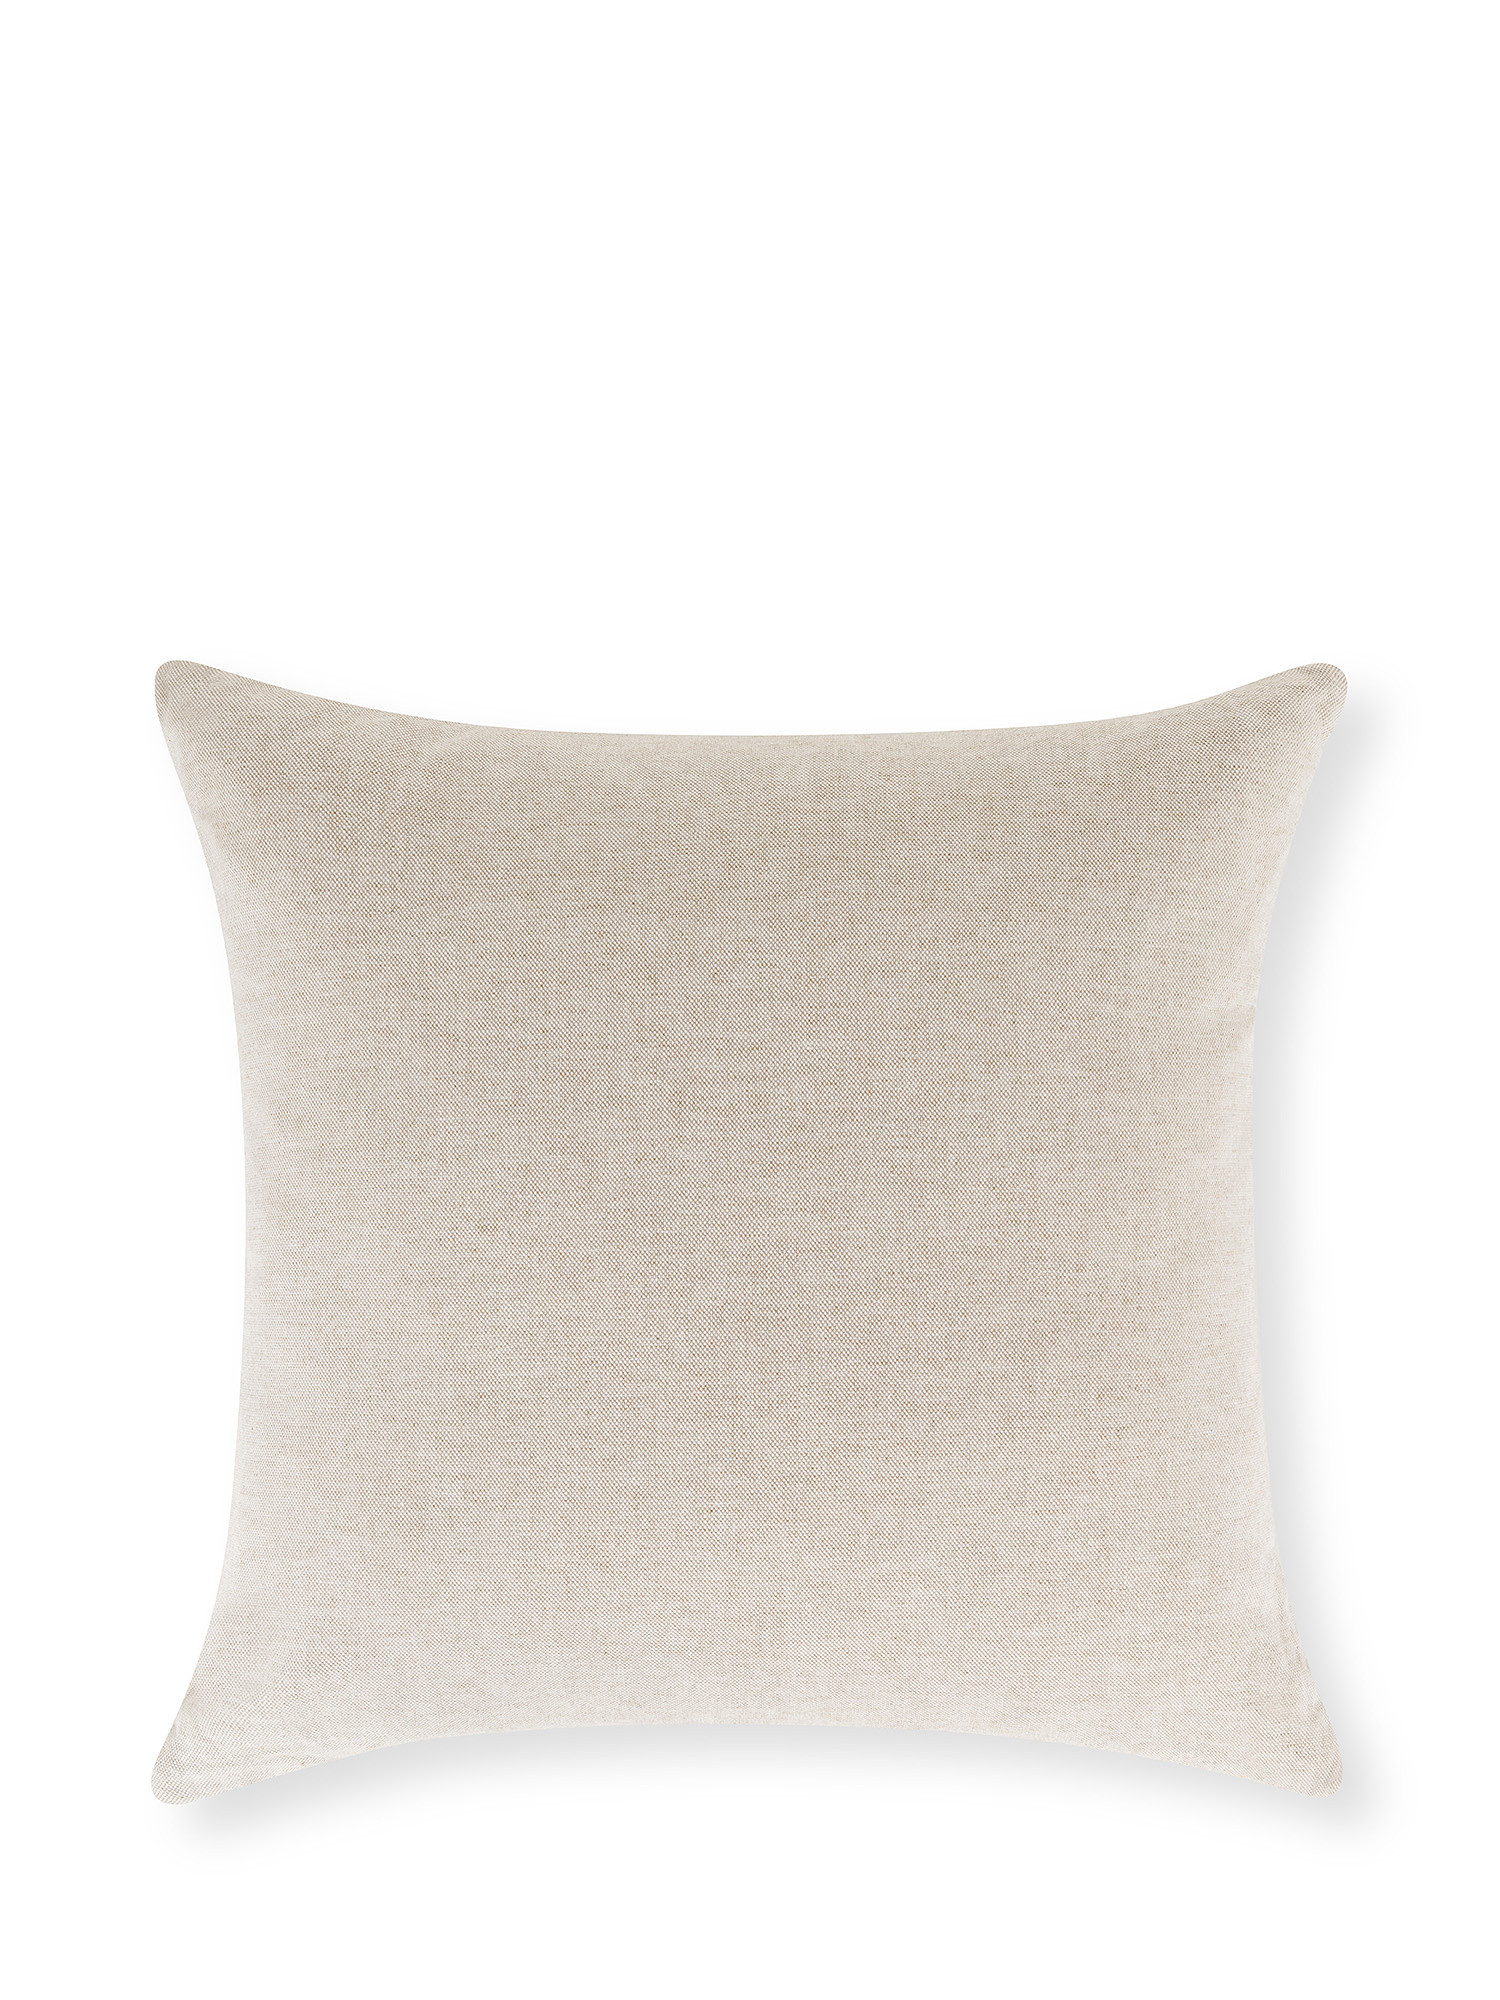 Cotton jacquard cushion with rose motif 45x45cm, Beige, large image number 1